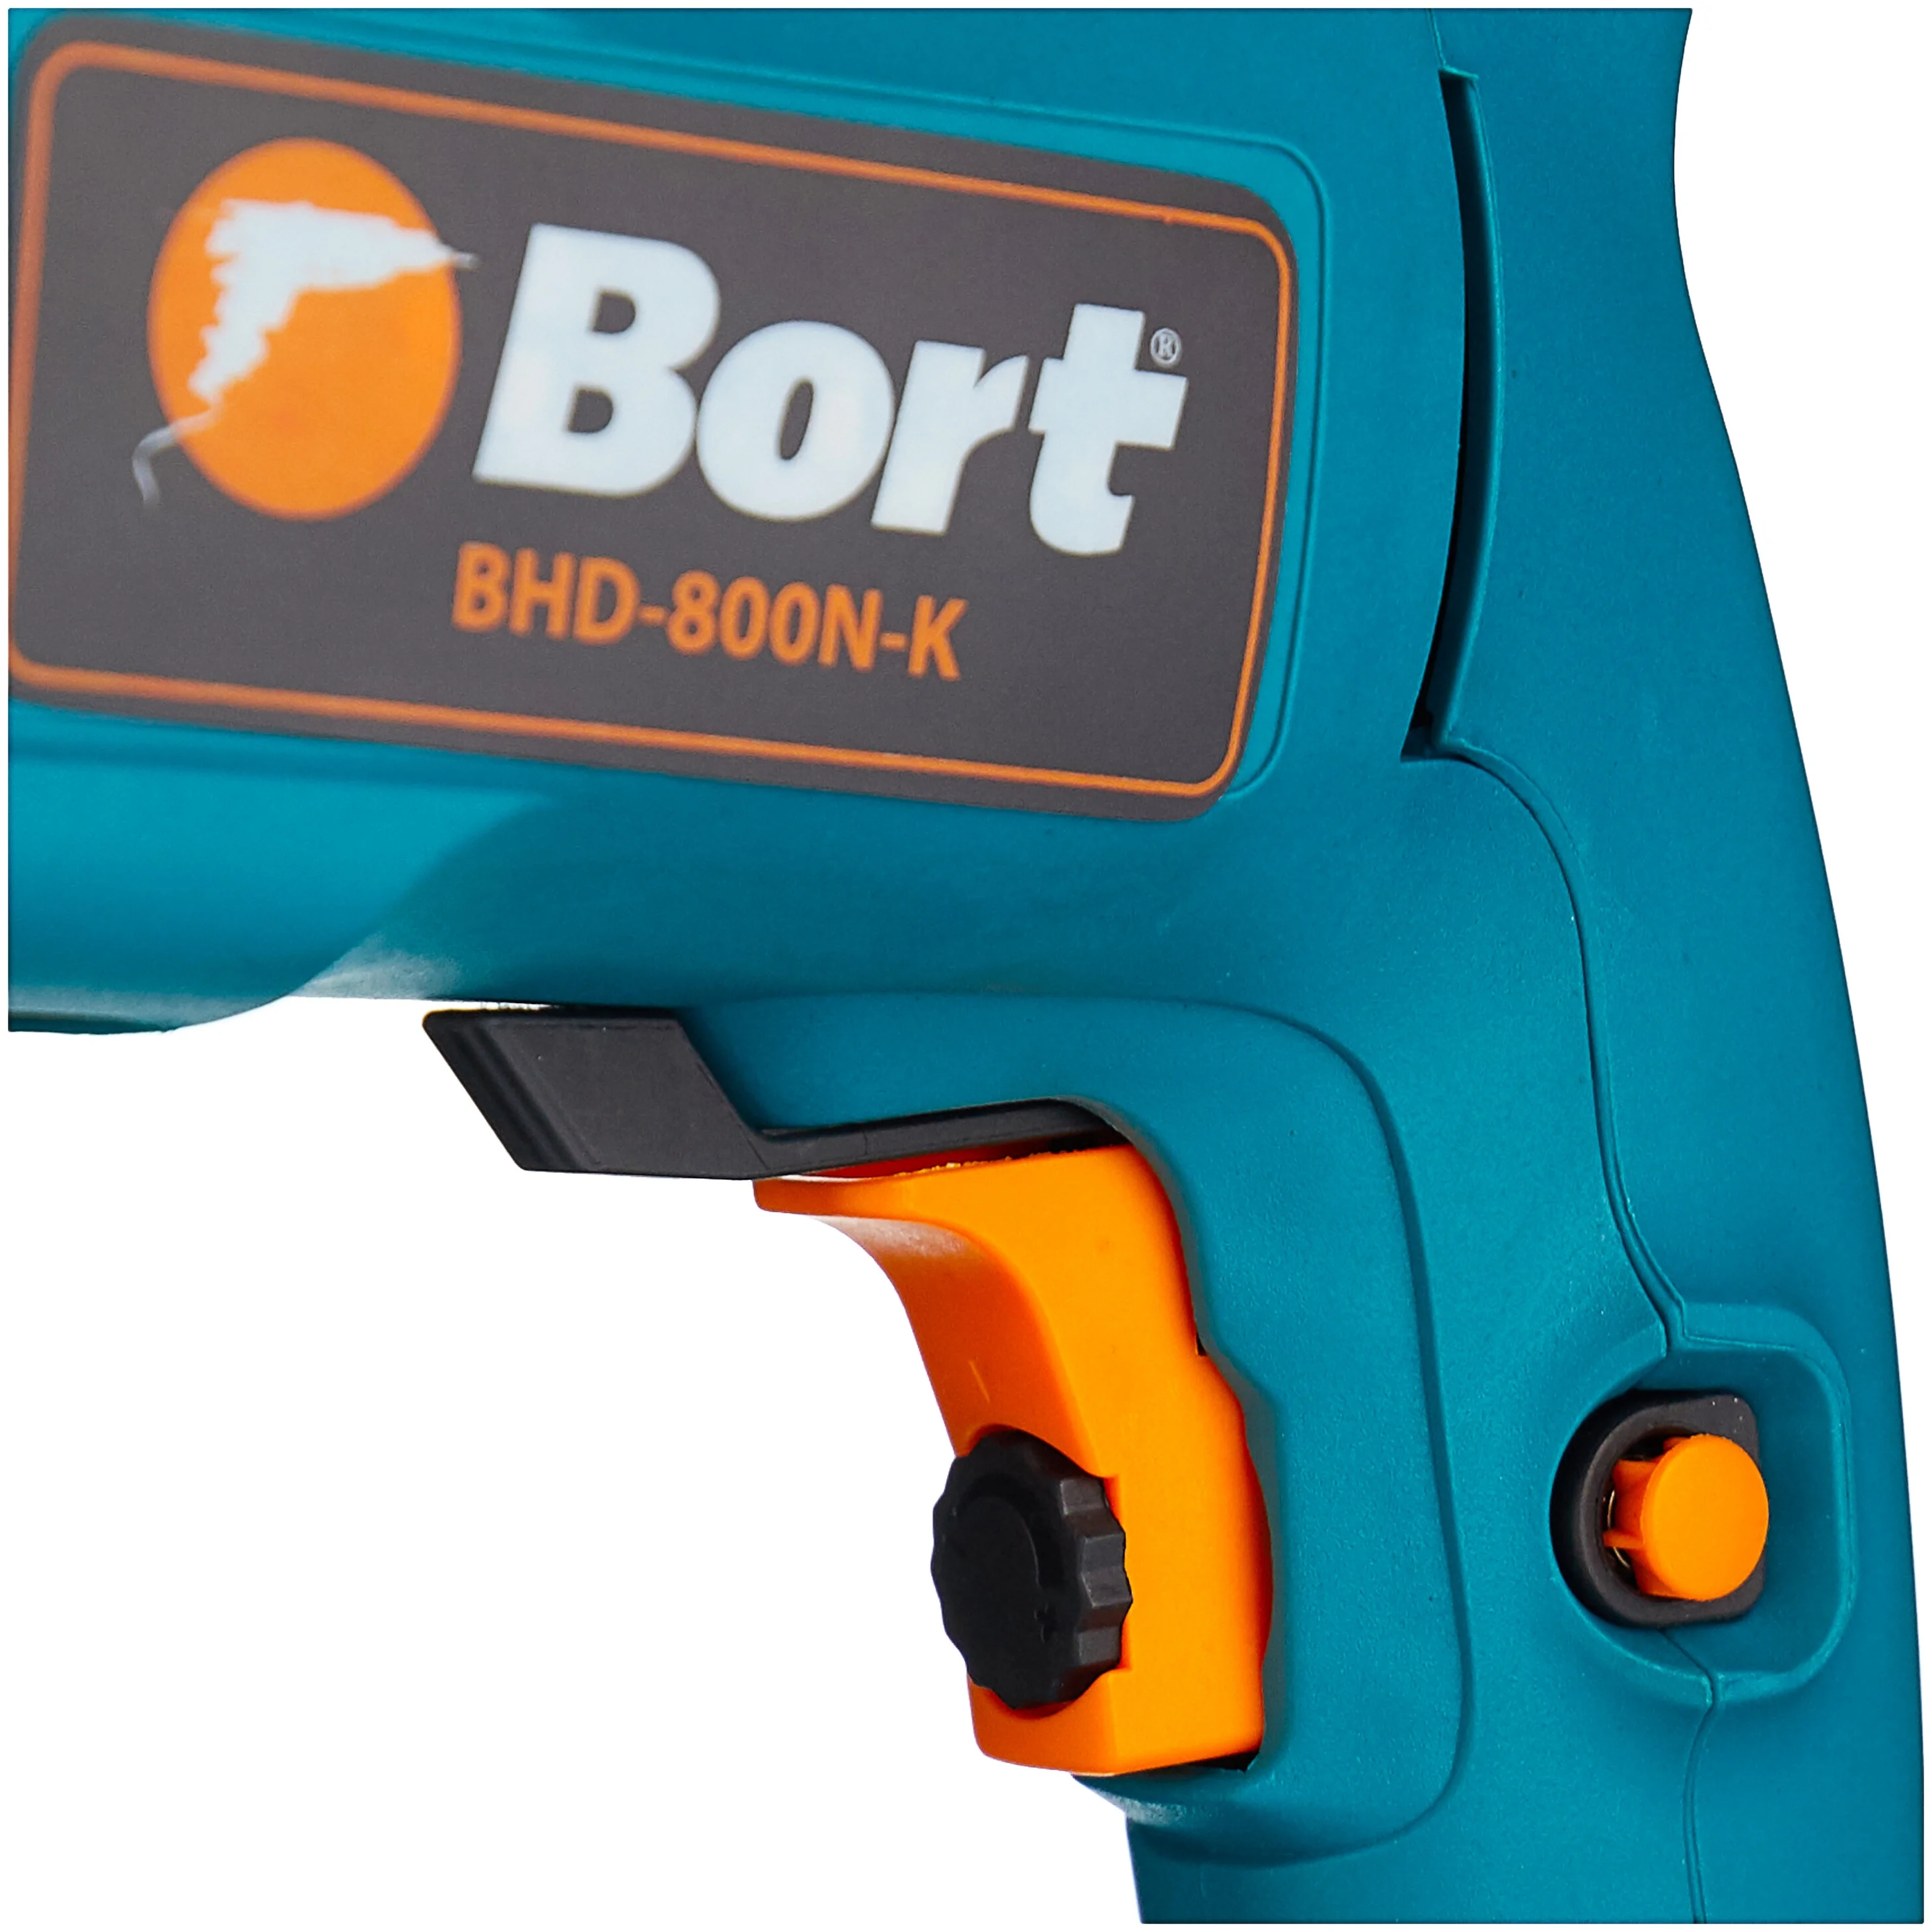 Bort BHD-800N-K, 800 Вт - особенности конструкции: фиксация шпинделя, блокировка кнопки включения